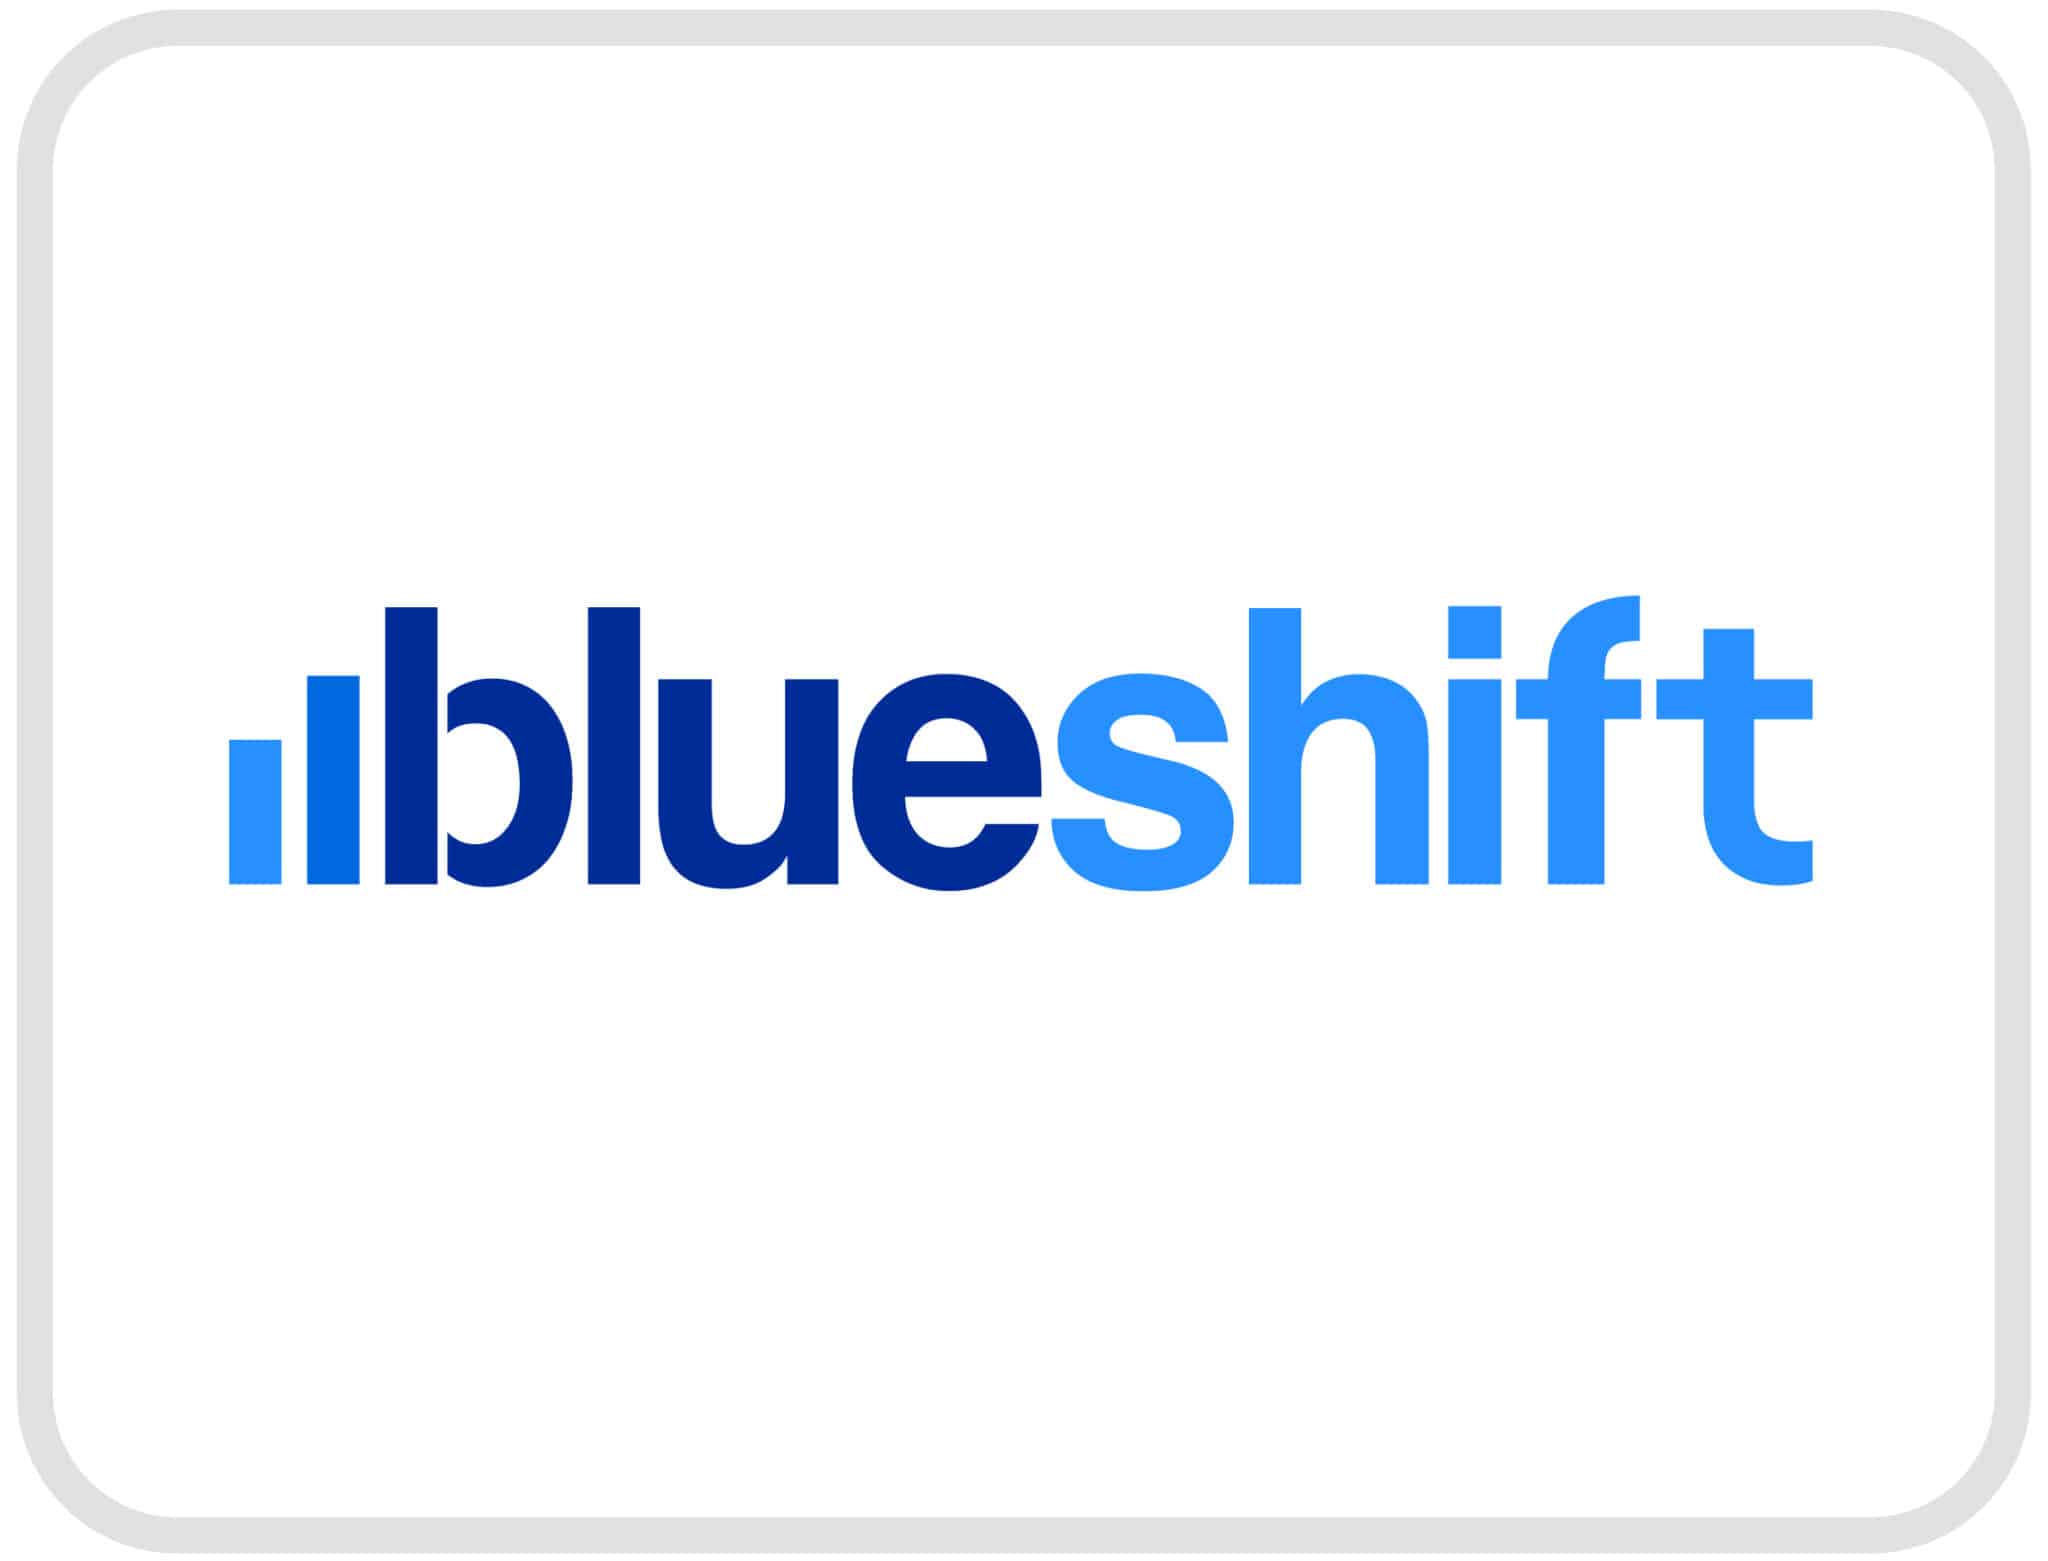 This is the blueshift logo